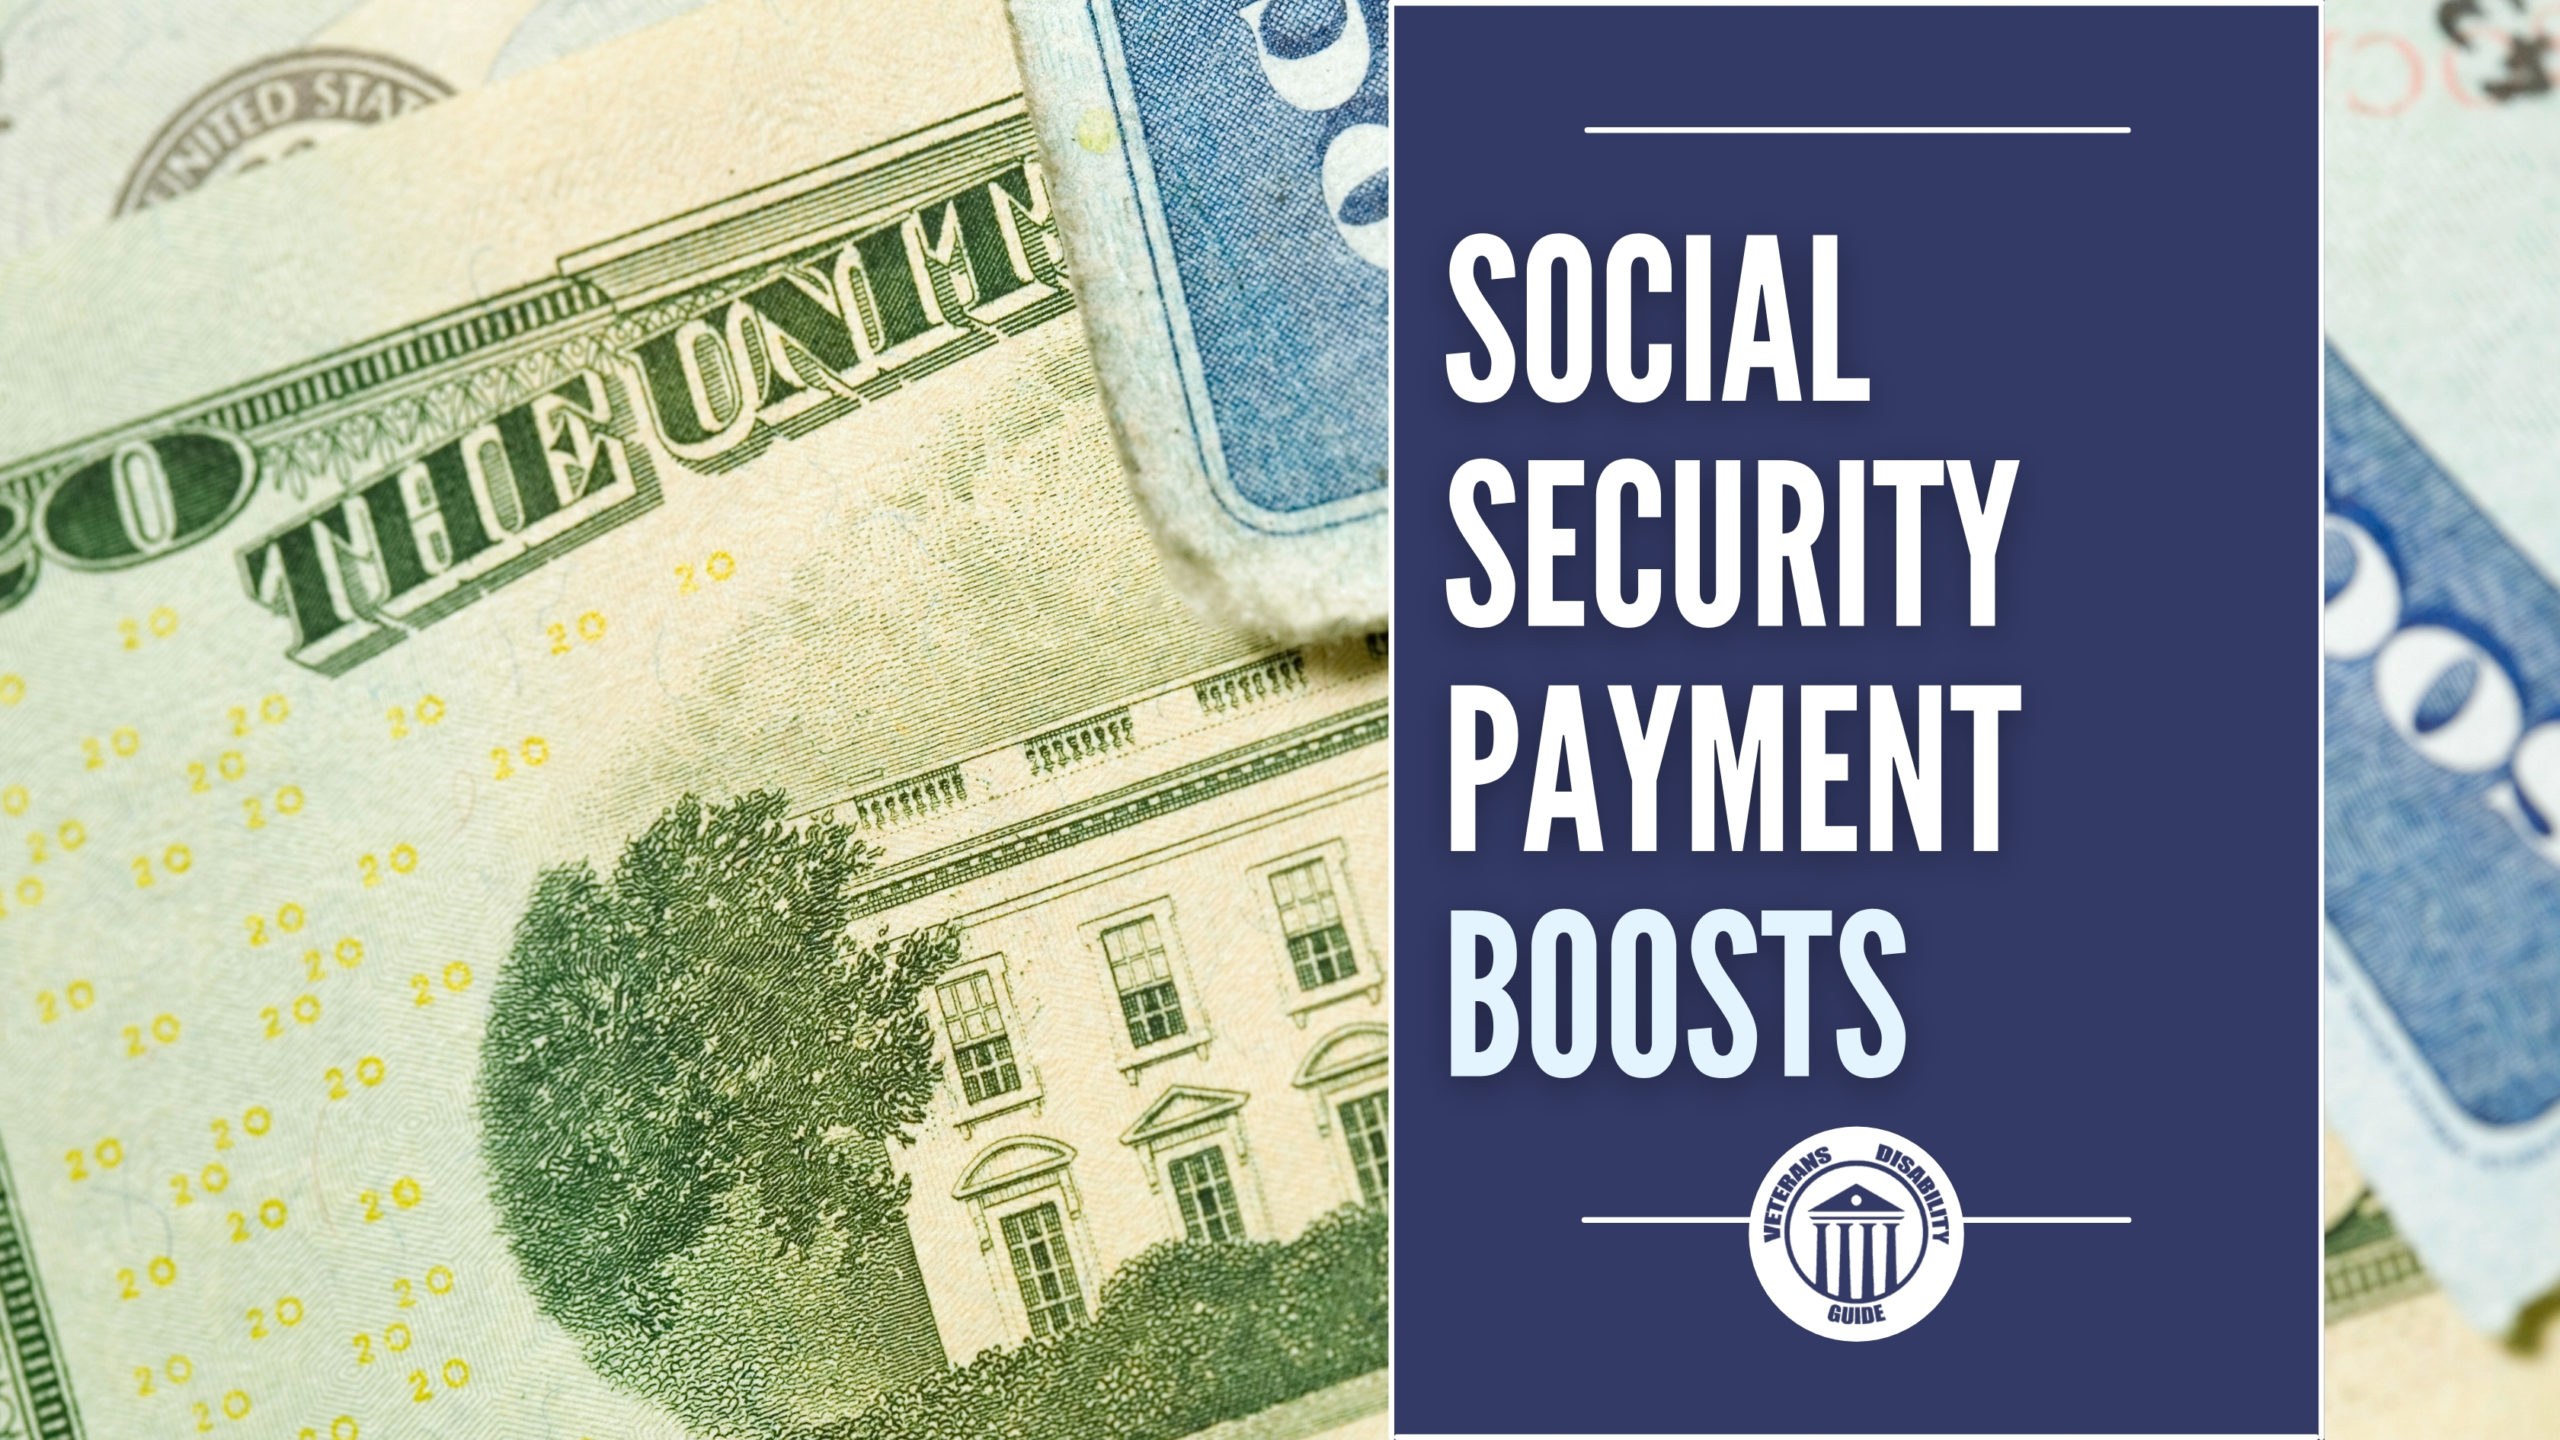 Social Security Payment Boosts Blog Header Image